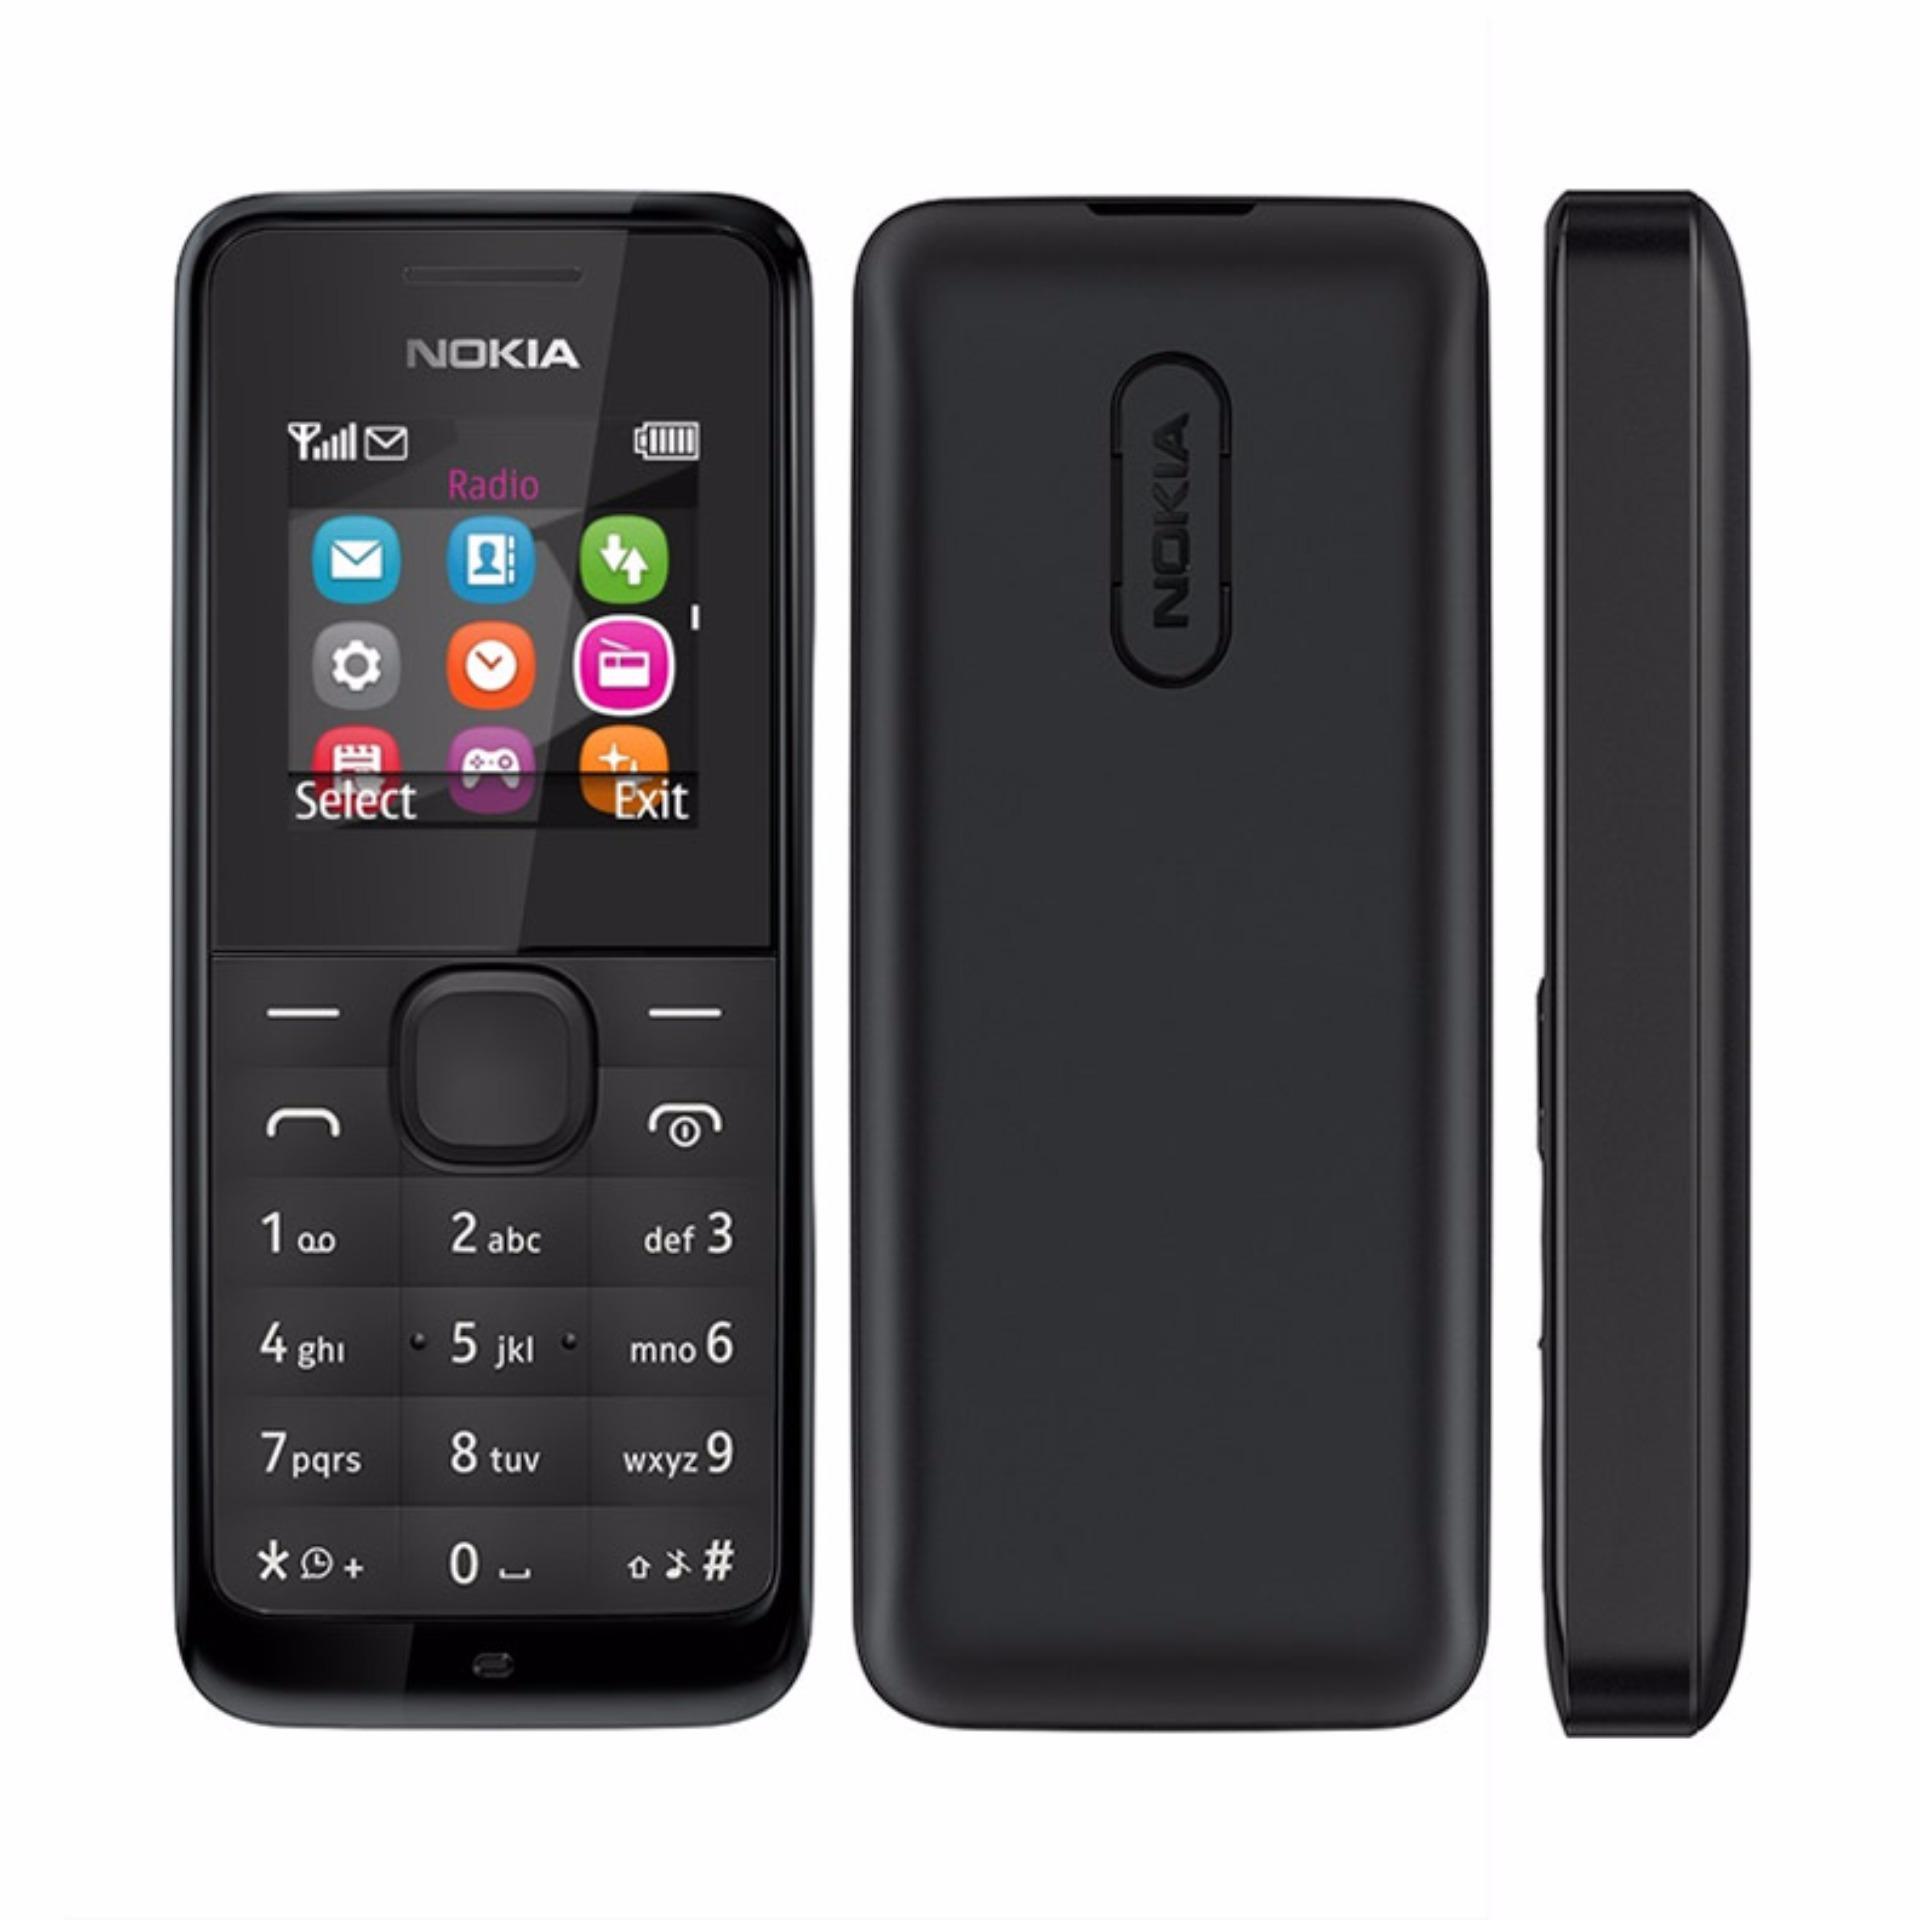  Nokia 105 DS Handphone - Black